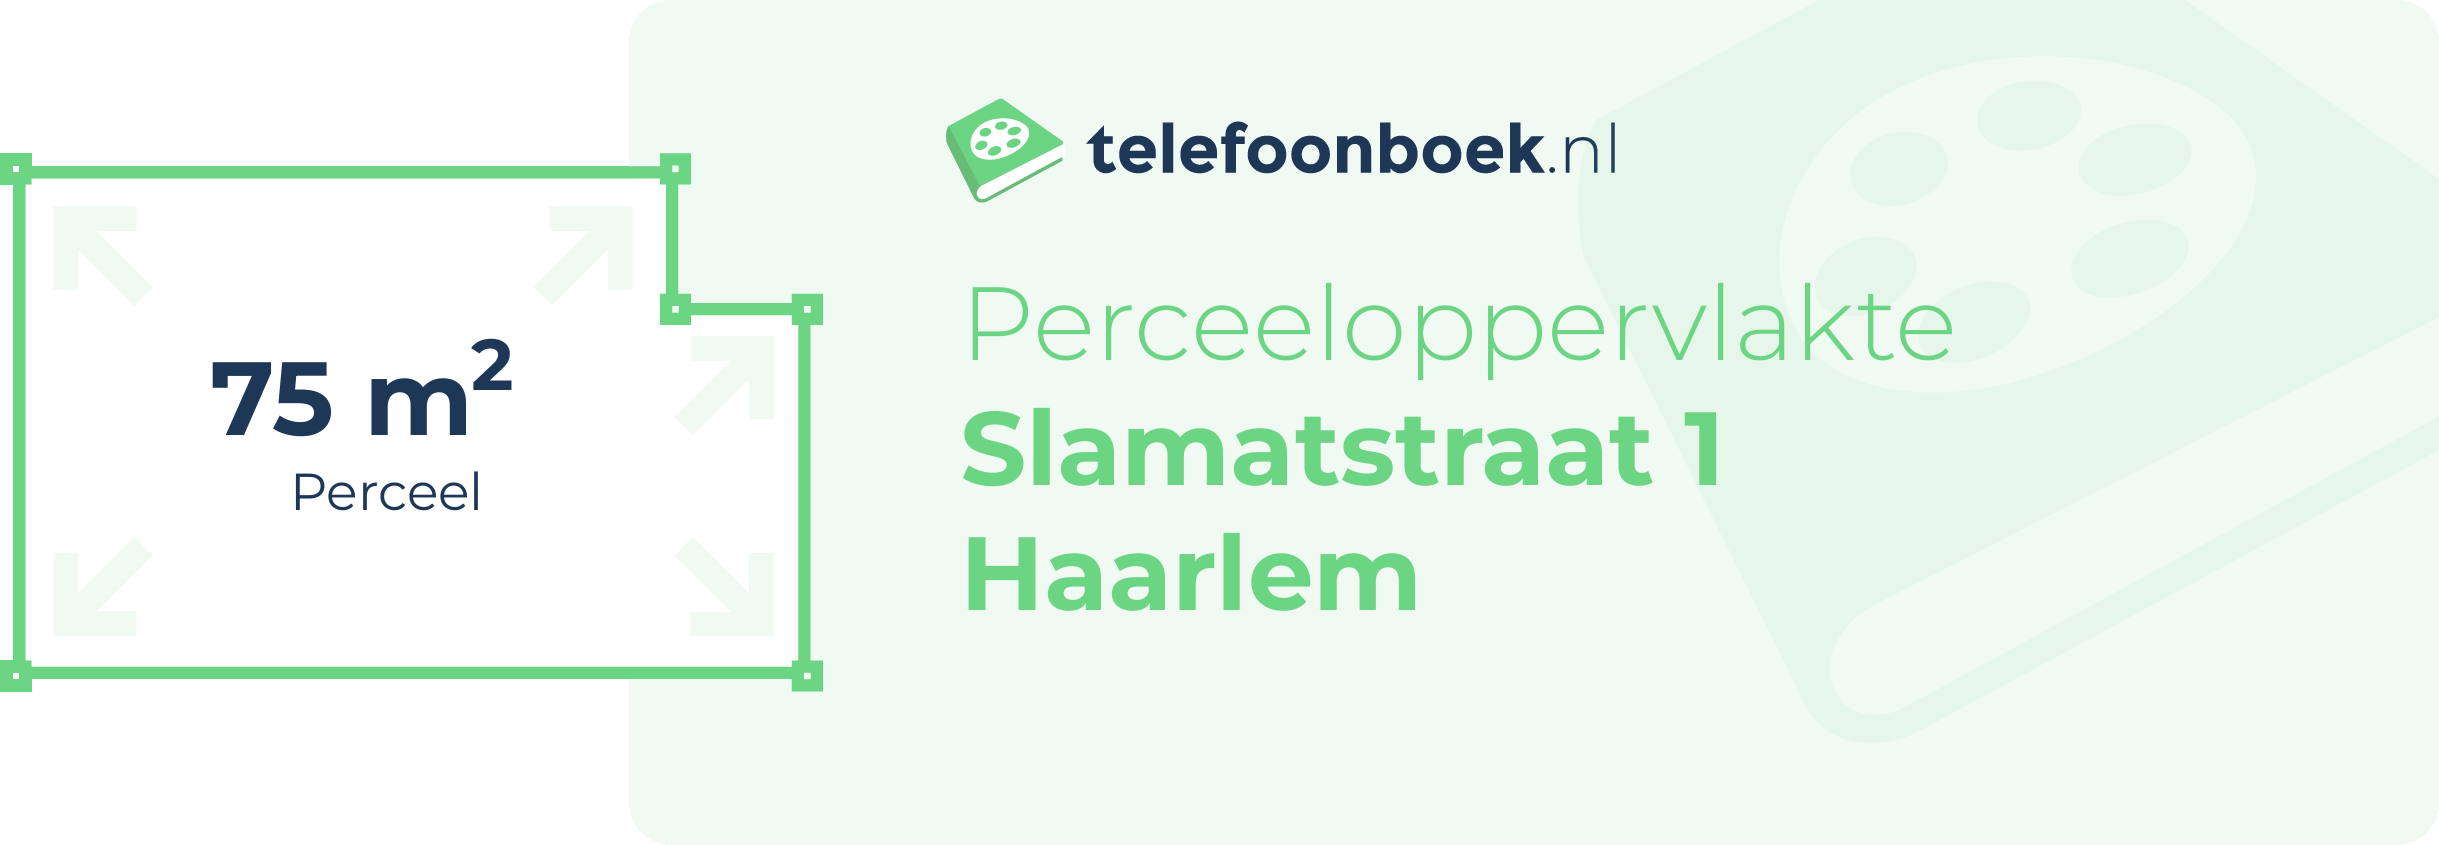 Perceeloppervlakte Slamatstraat 1 Haarlem